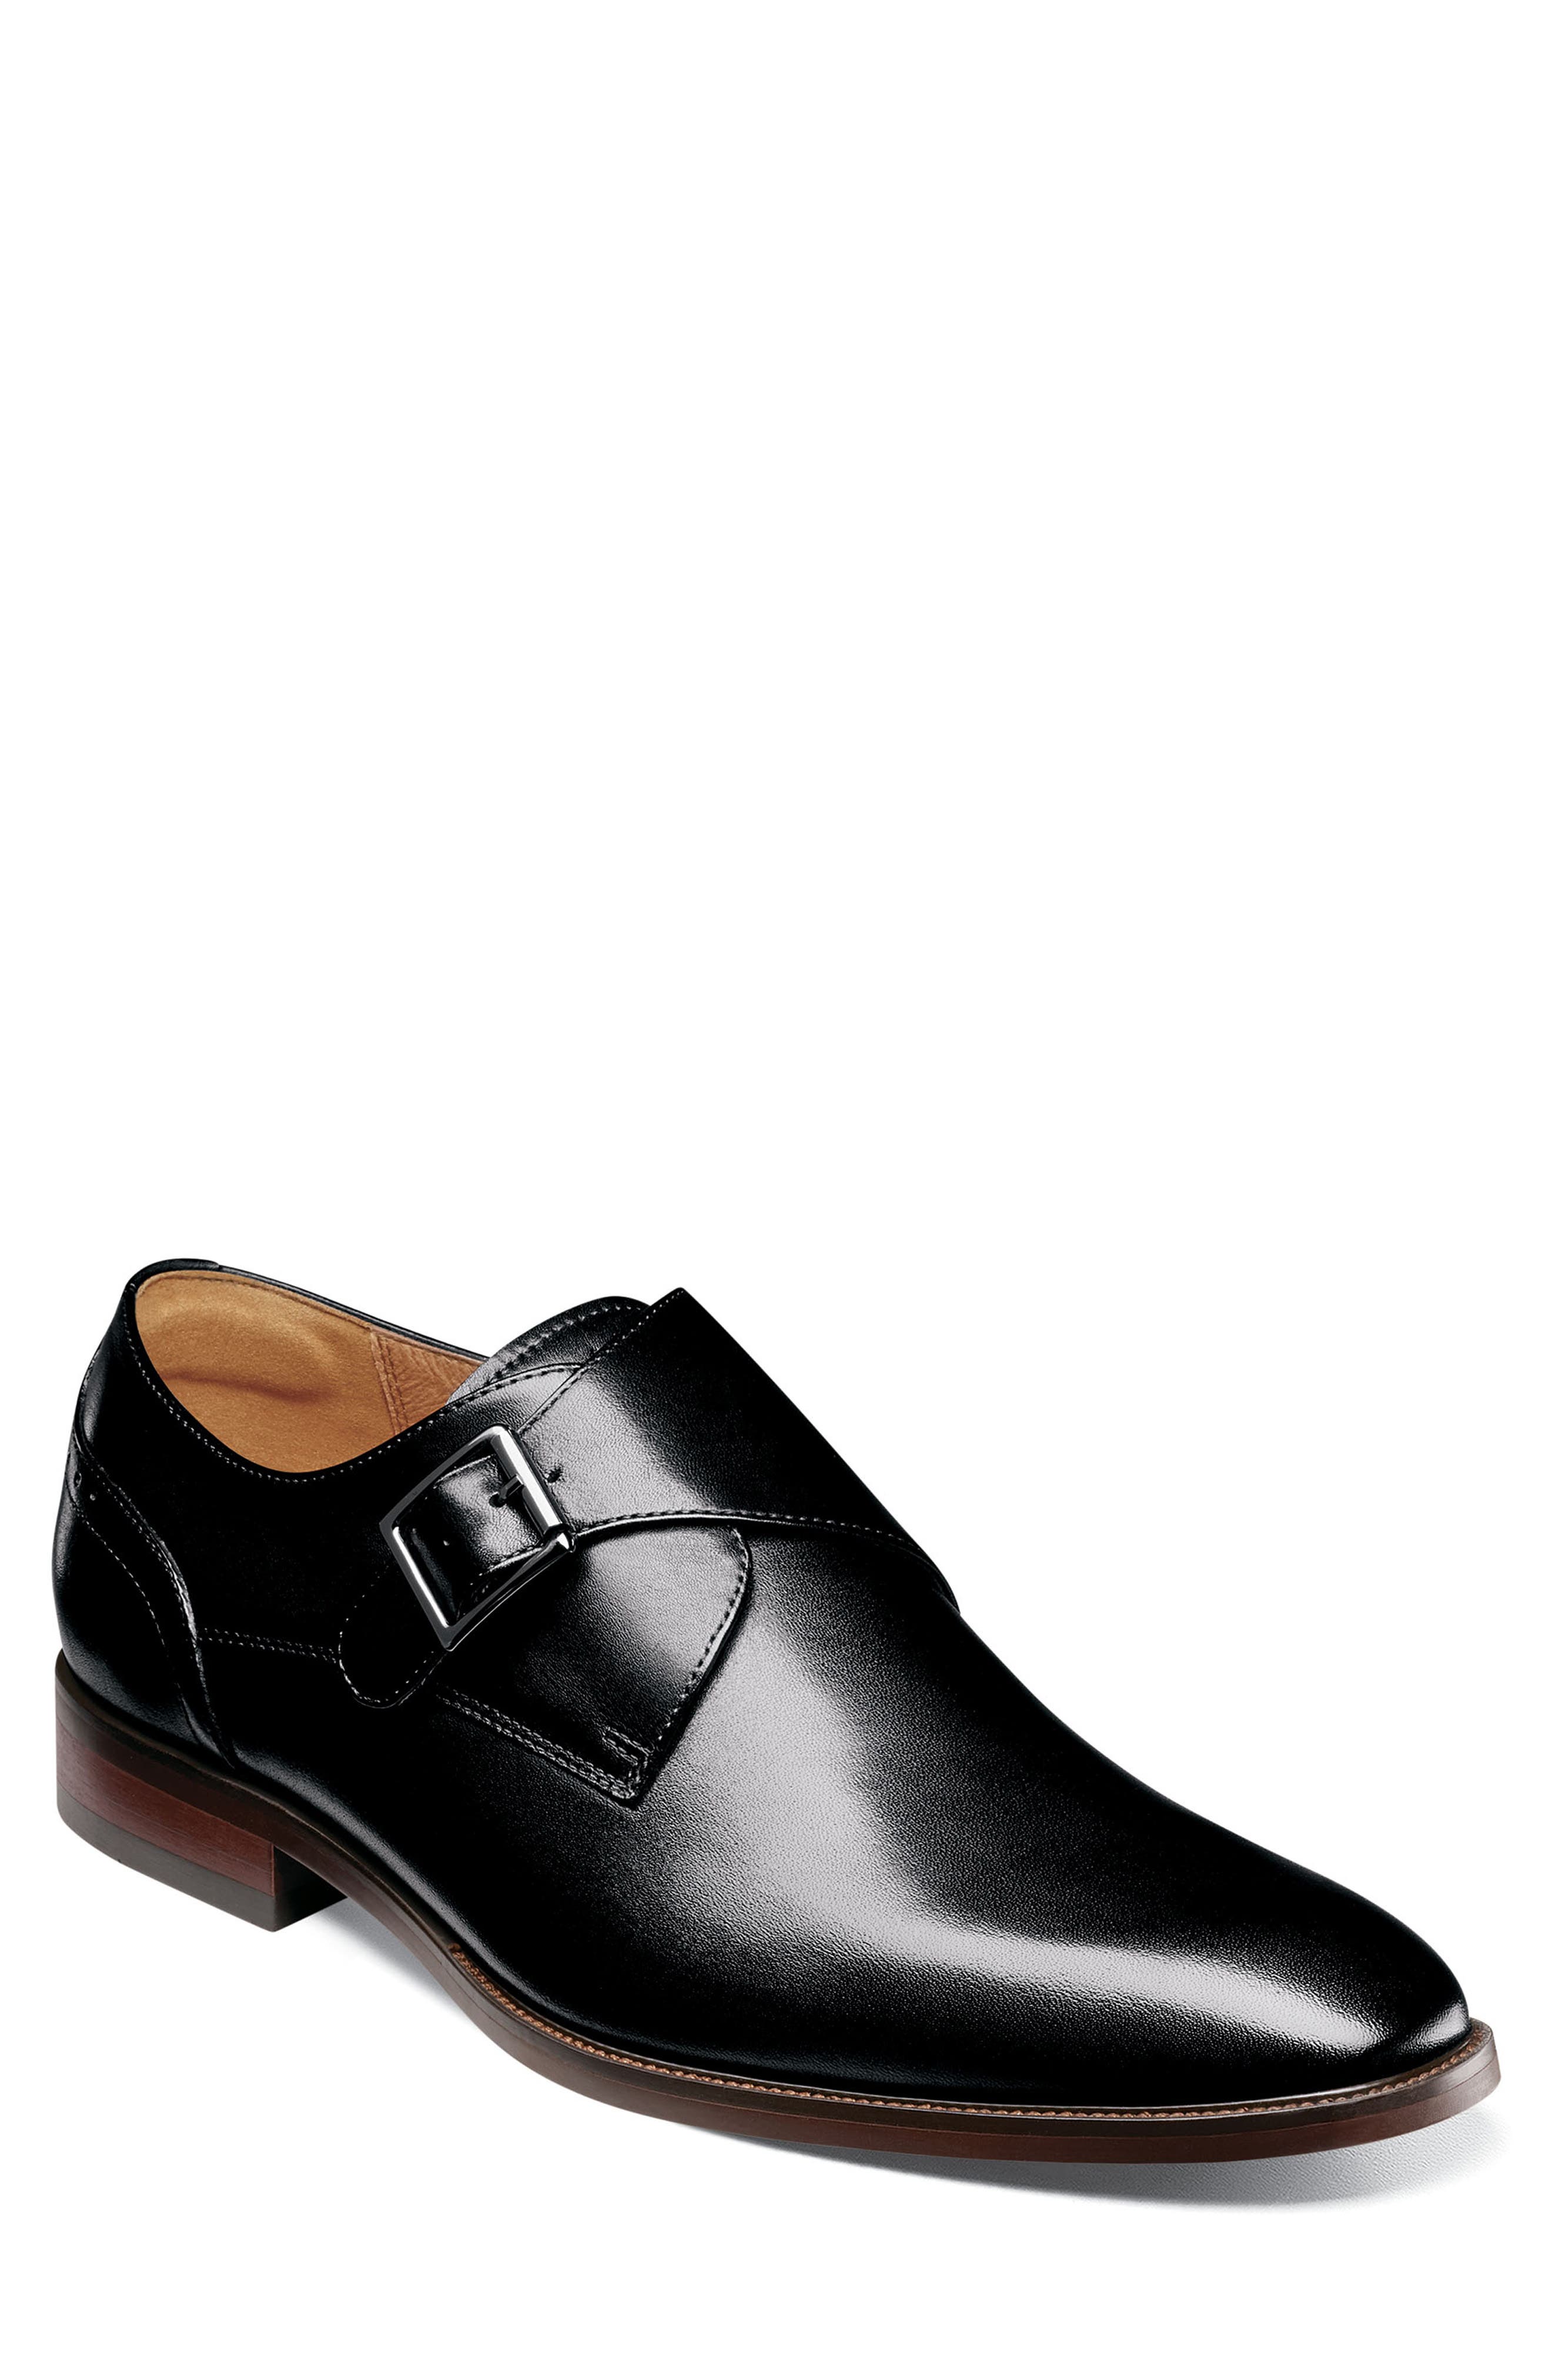 Details about   Base London MONTAGE Mens Formal Elegant Leather Monk Strap Shoes Waxy Black 